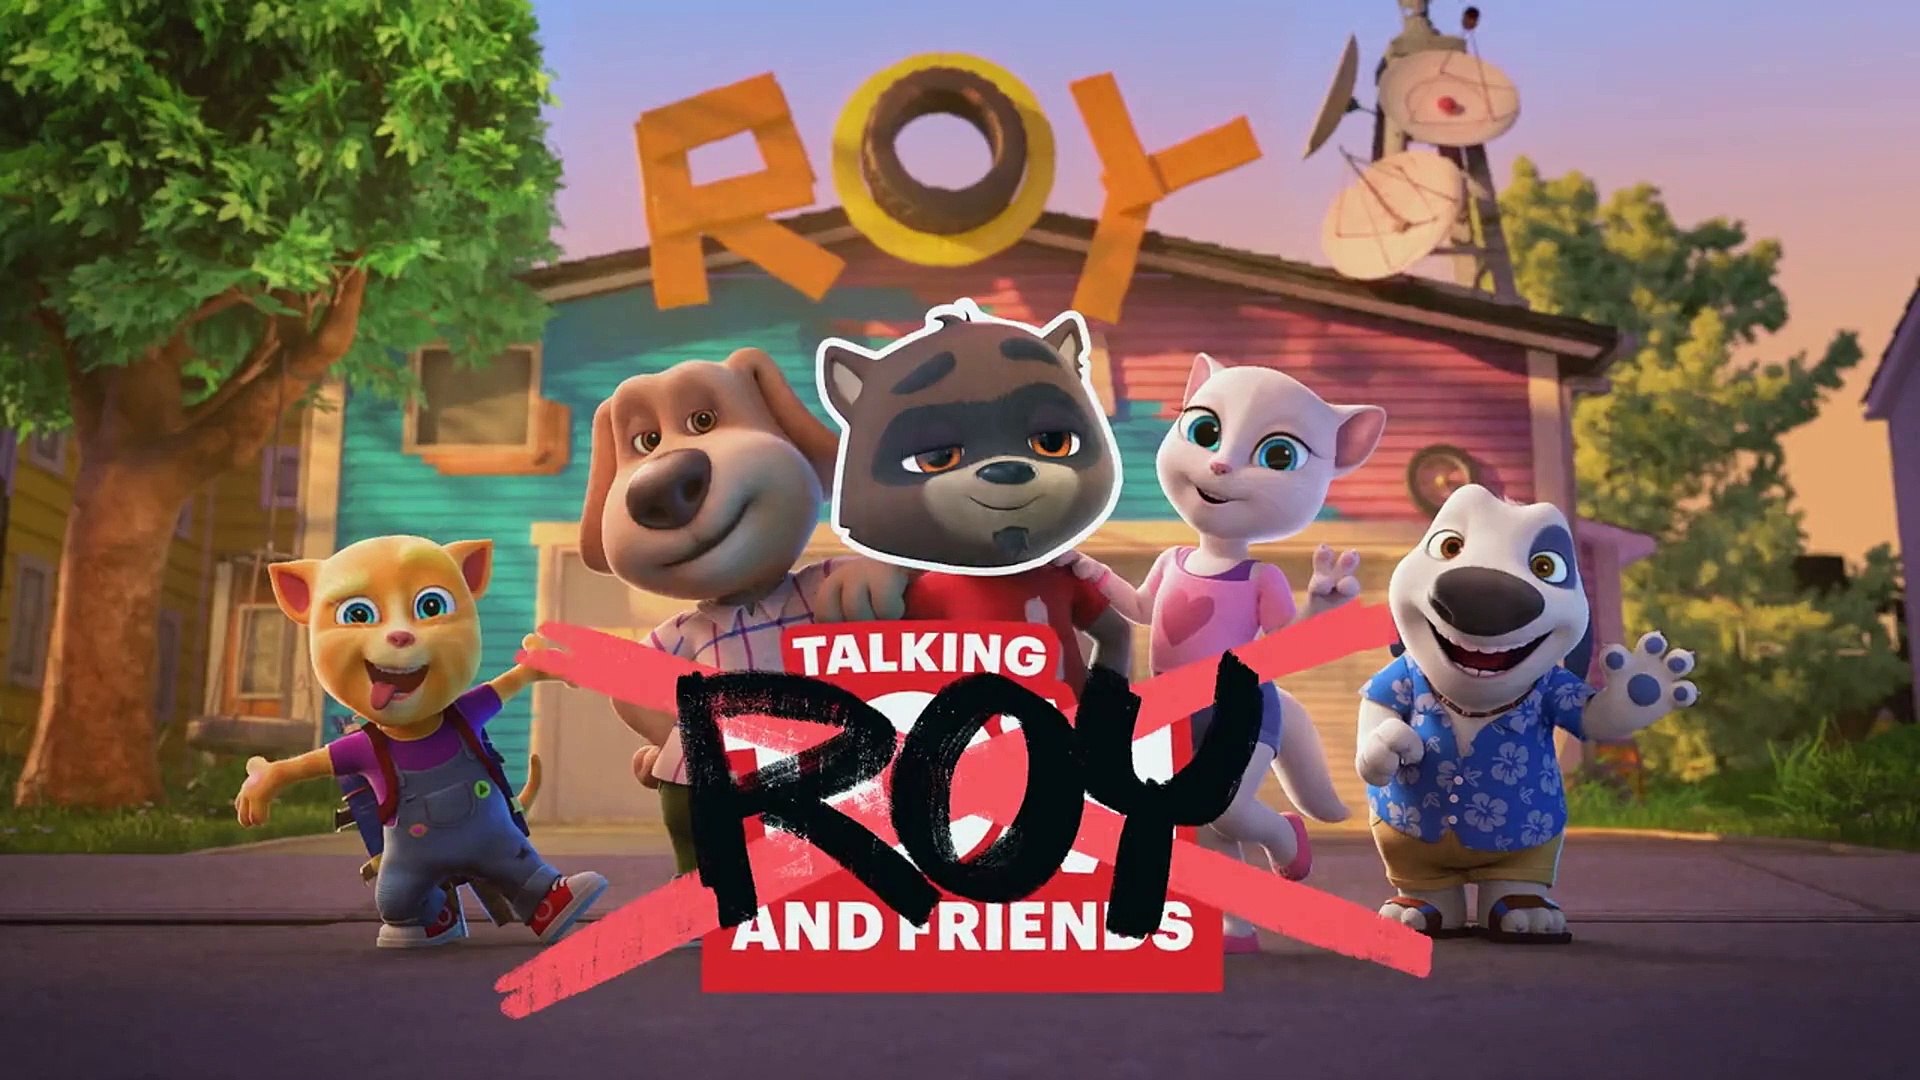 Episodes roy full [WATCH] Roy